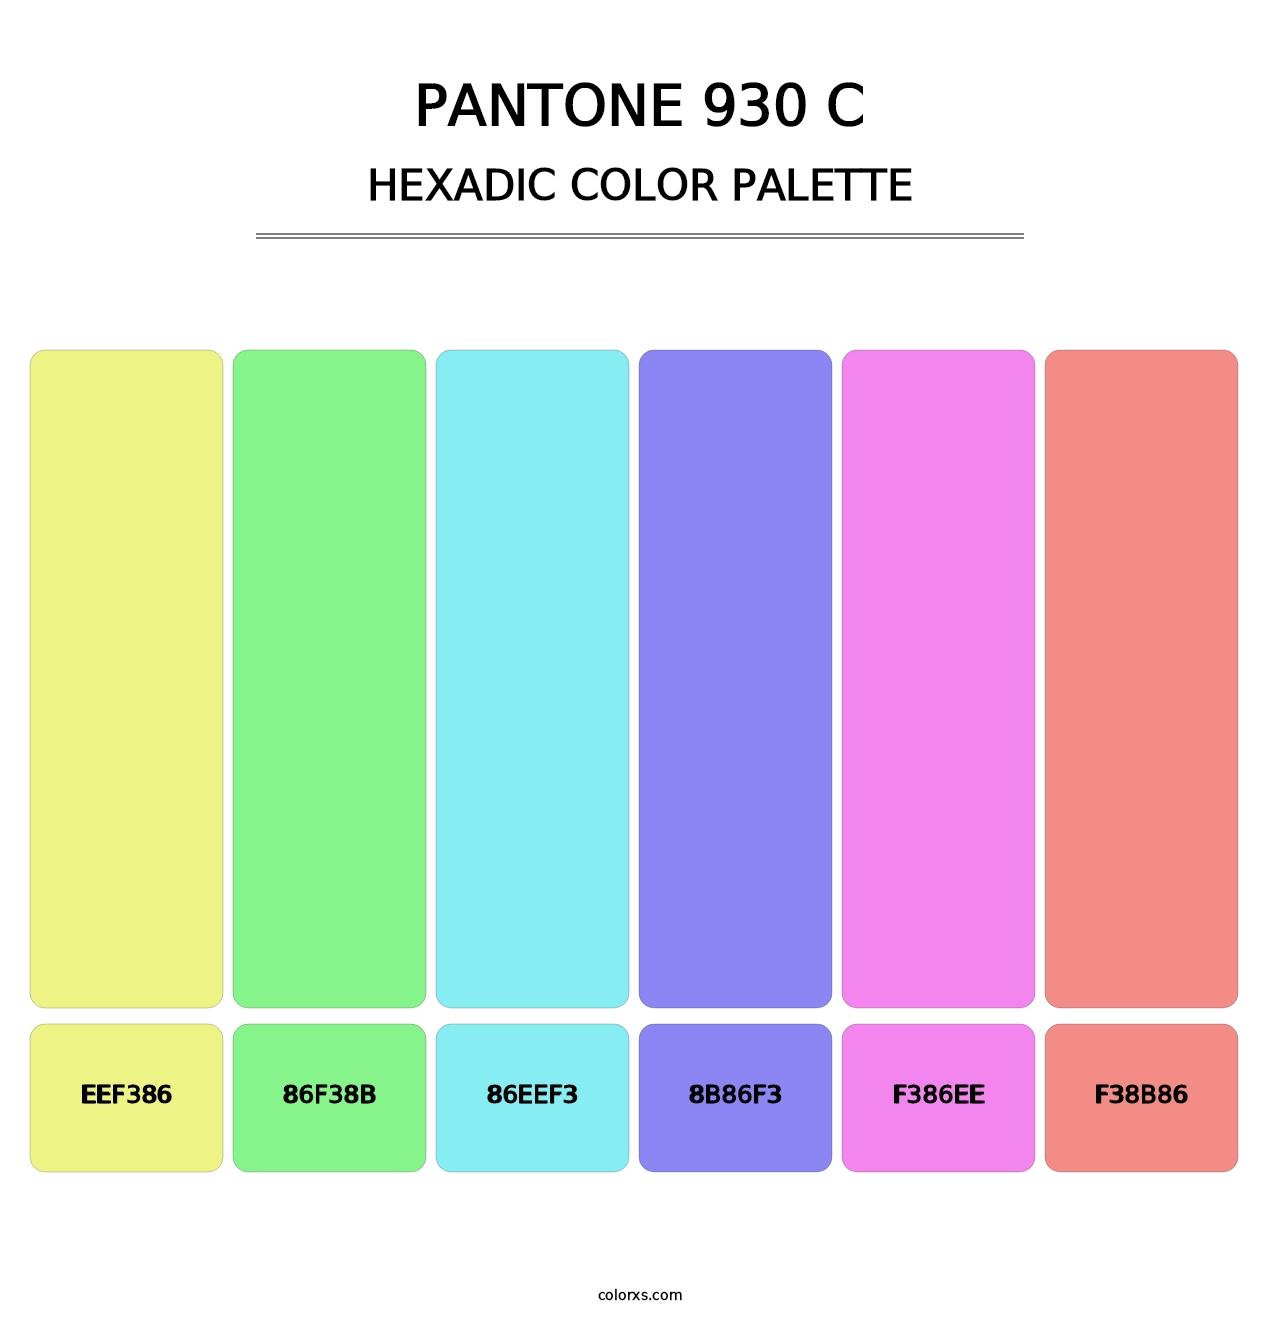 PANTONE 930 C - Hexadic Color Palette